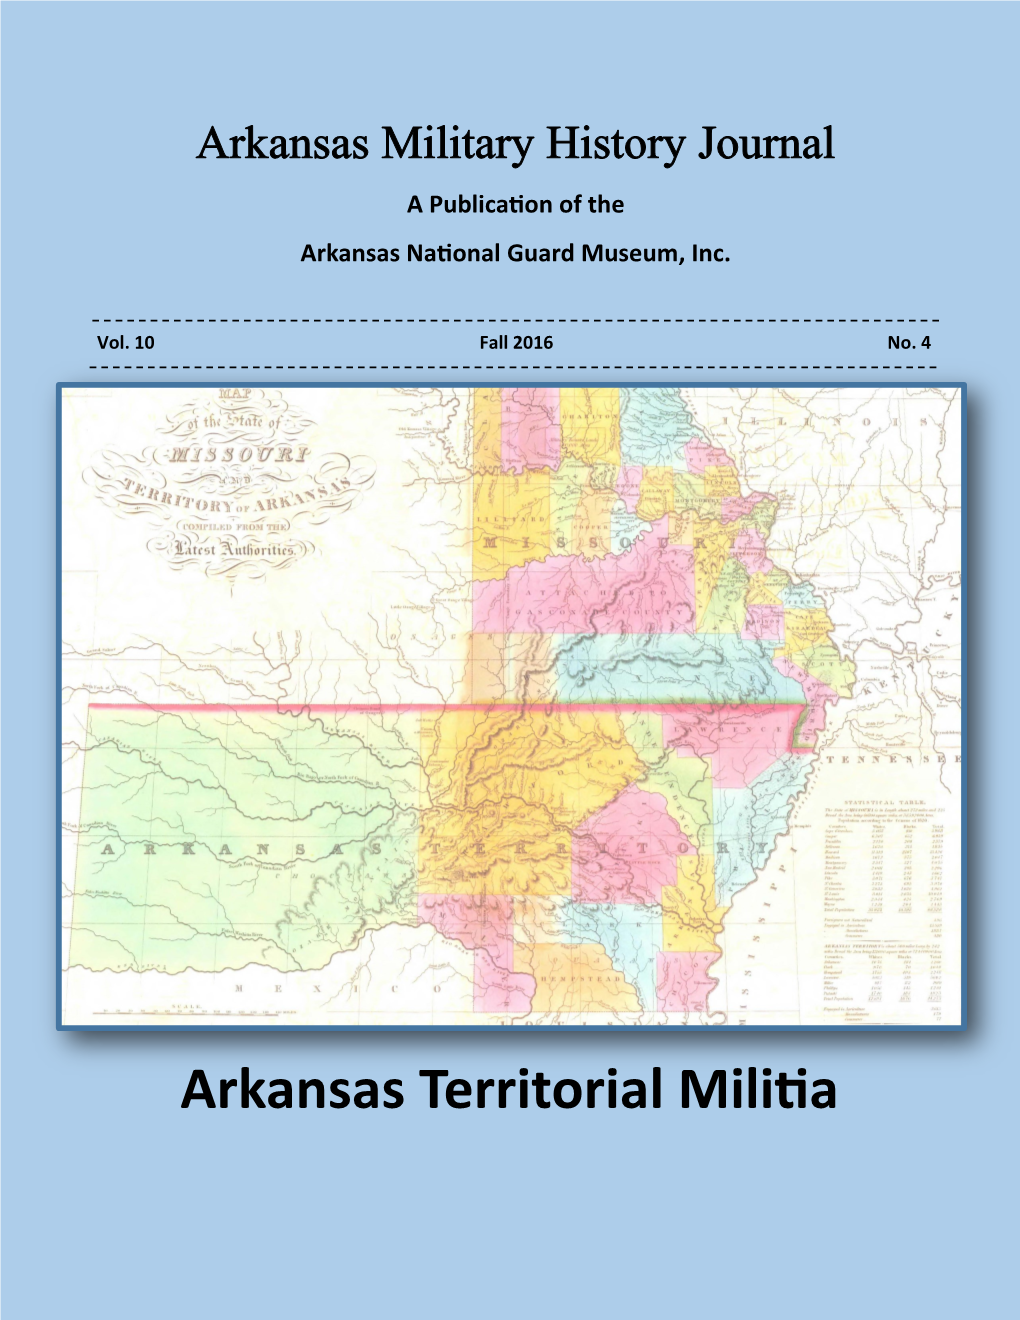 Arkansas Territorial Militia BOARD of DIRECTORS Chairman Brigadier General Keith A